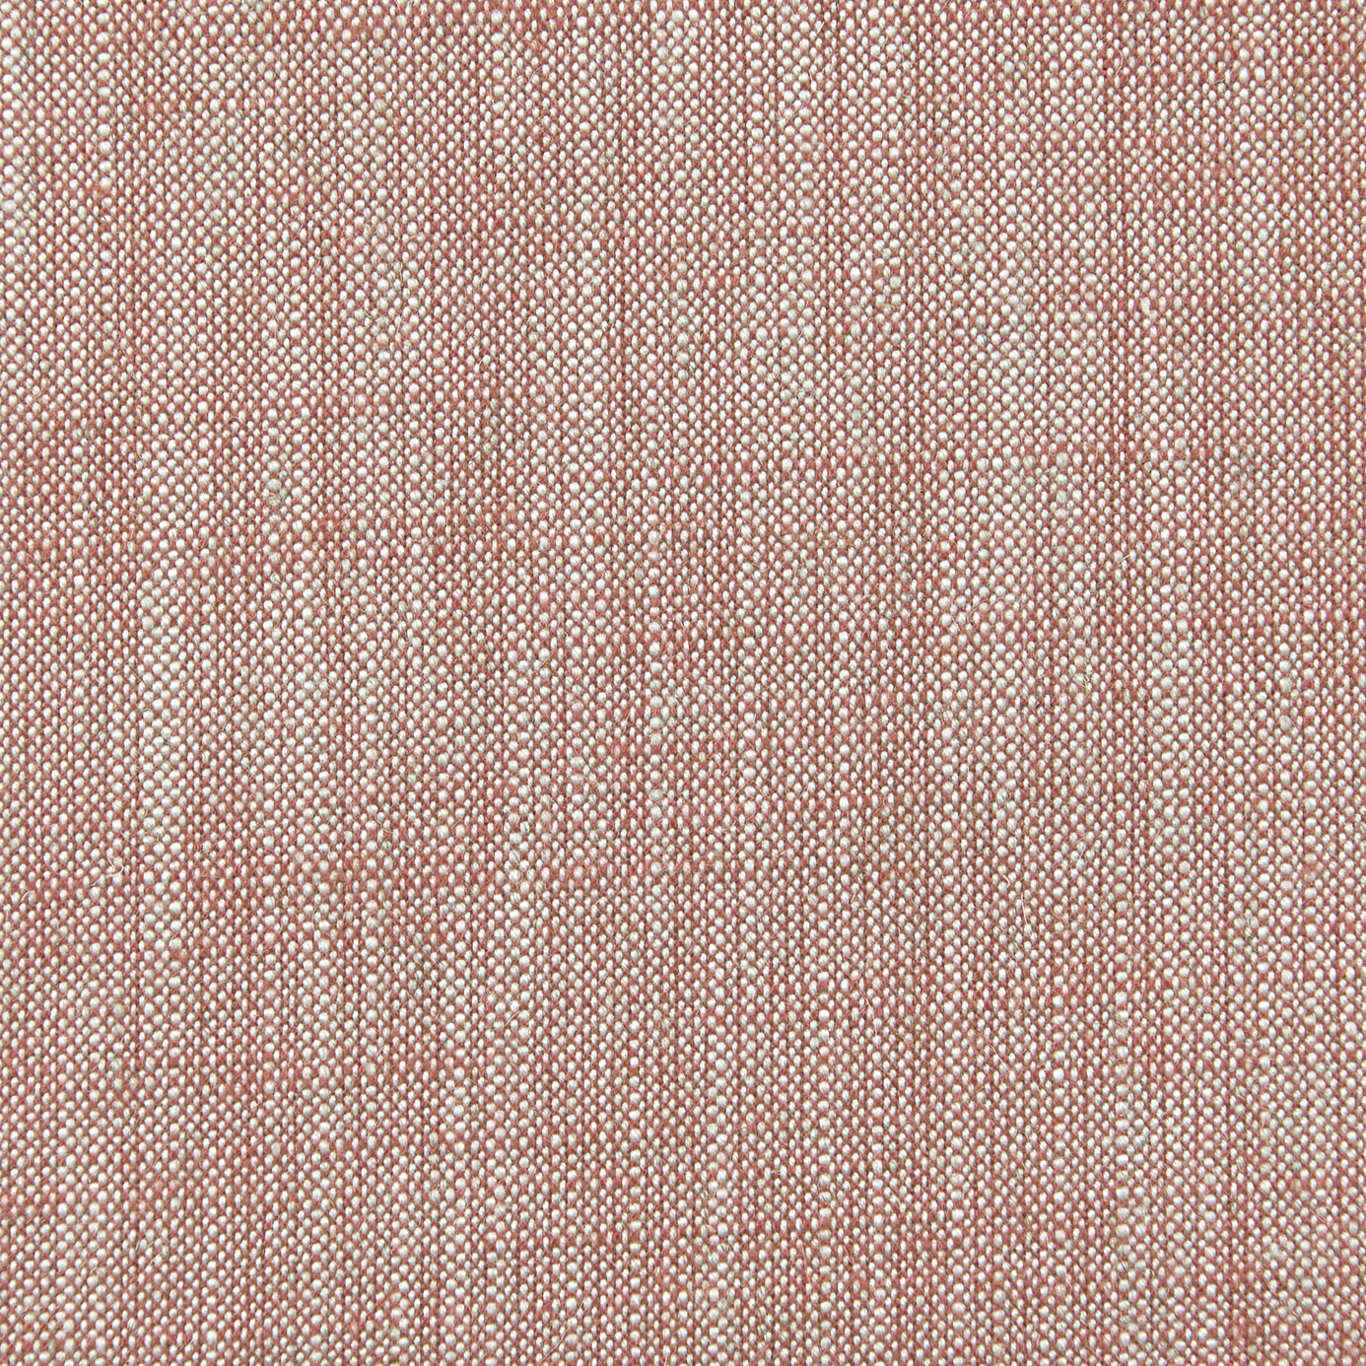 Biarritz Fabric by Clarke & Clarke - F0965/17 - Geranium